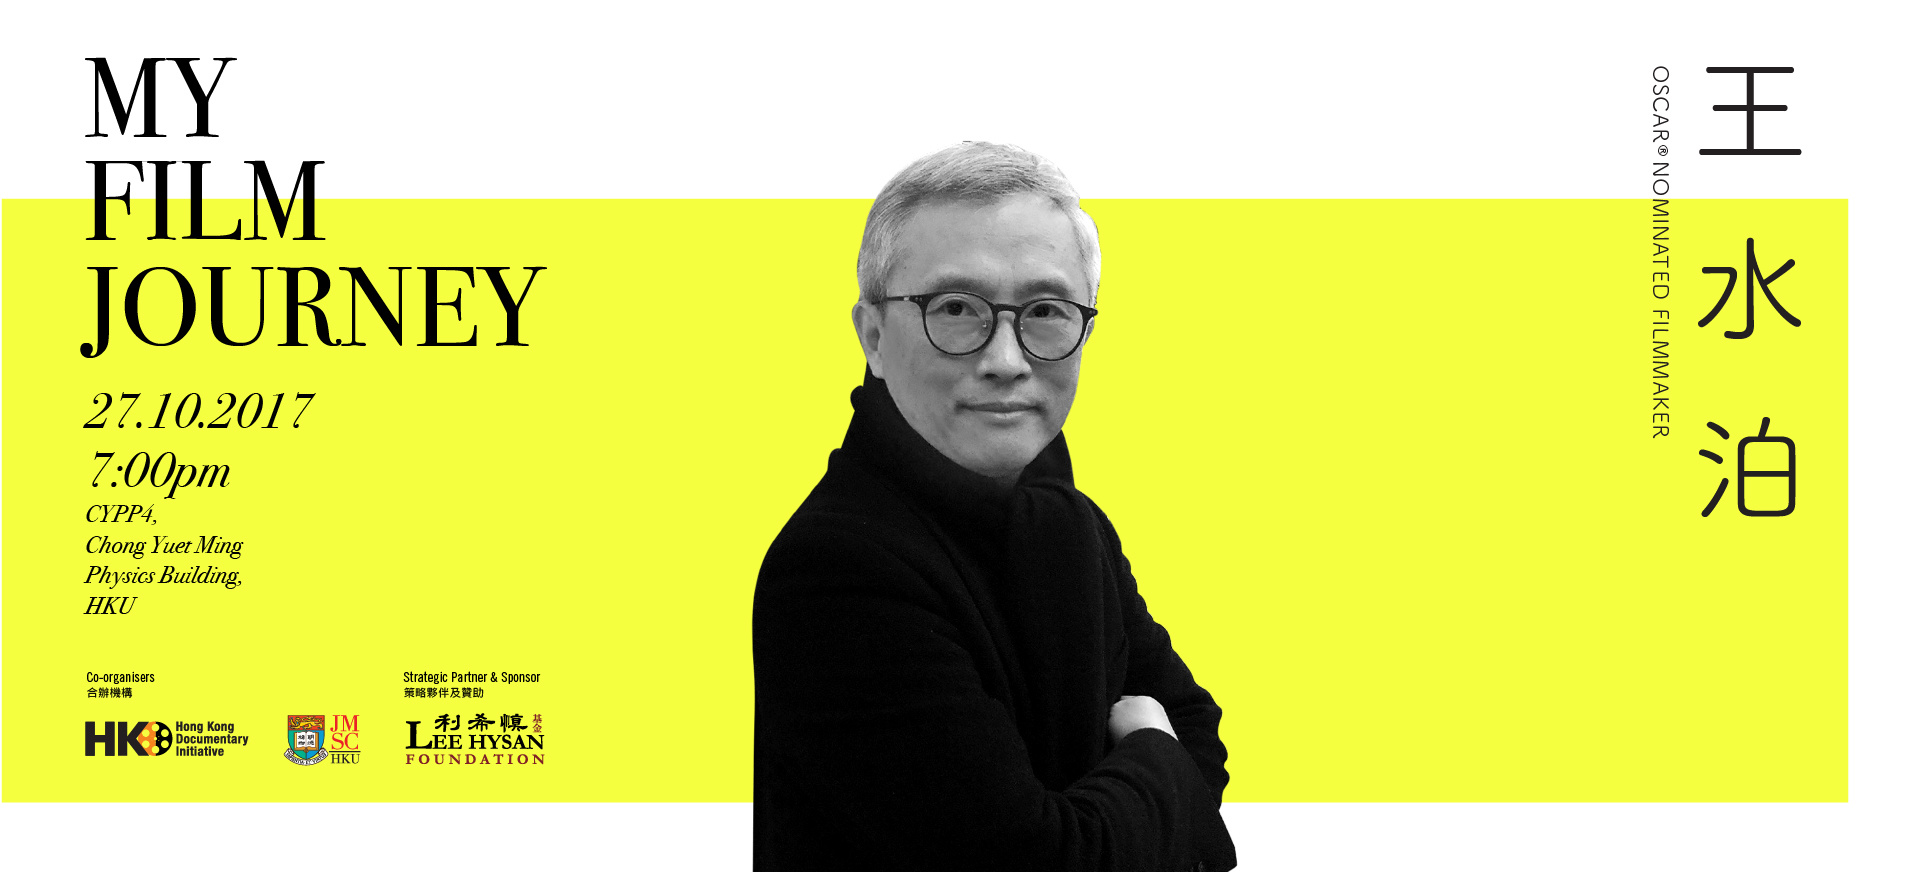 My Film Journey - a dialogue with Oscar nominated filmmaker Shuibo Wang 我的電影歷程 - 與奧斯卡提名導演王水泊對話